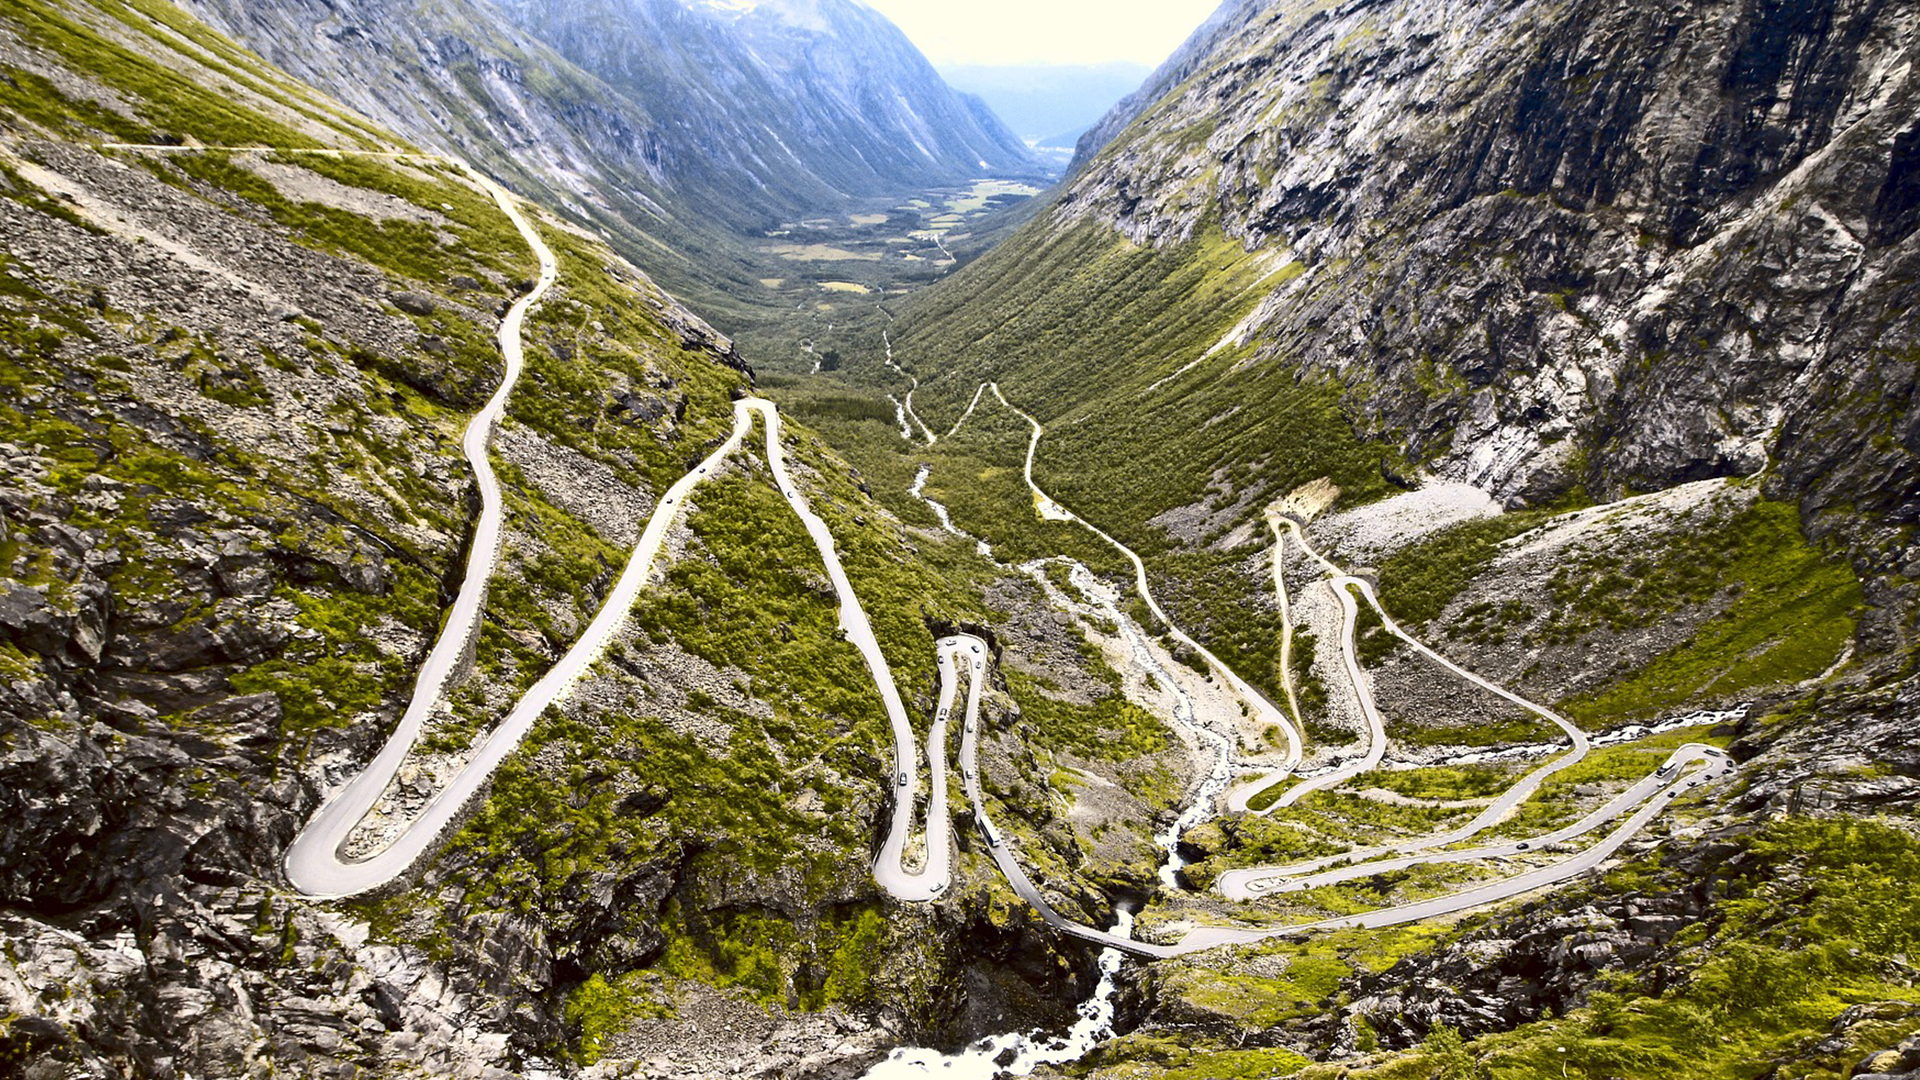 Featured image for “Die besten Roadtrips durch Norwegen”